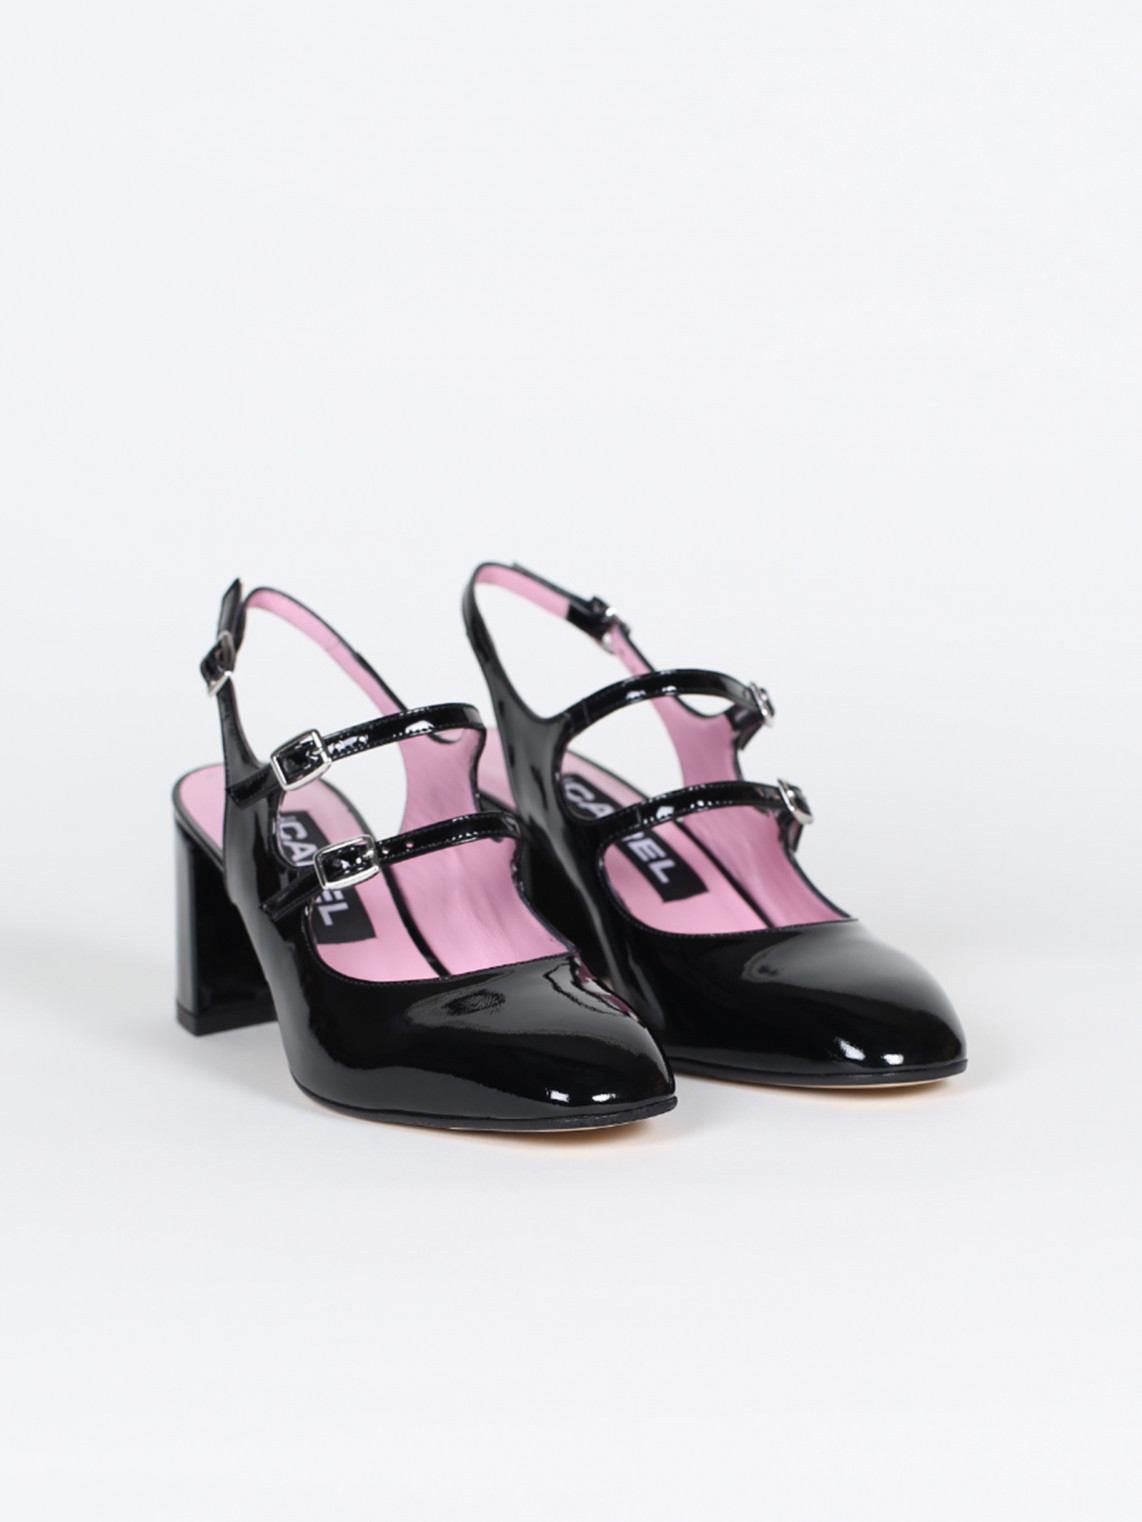 Banana Black Patent Leather Slingback Mary Janes Carel Paris Shoes